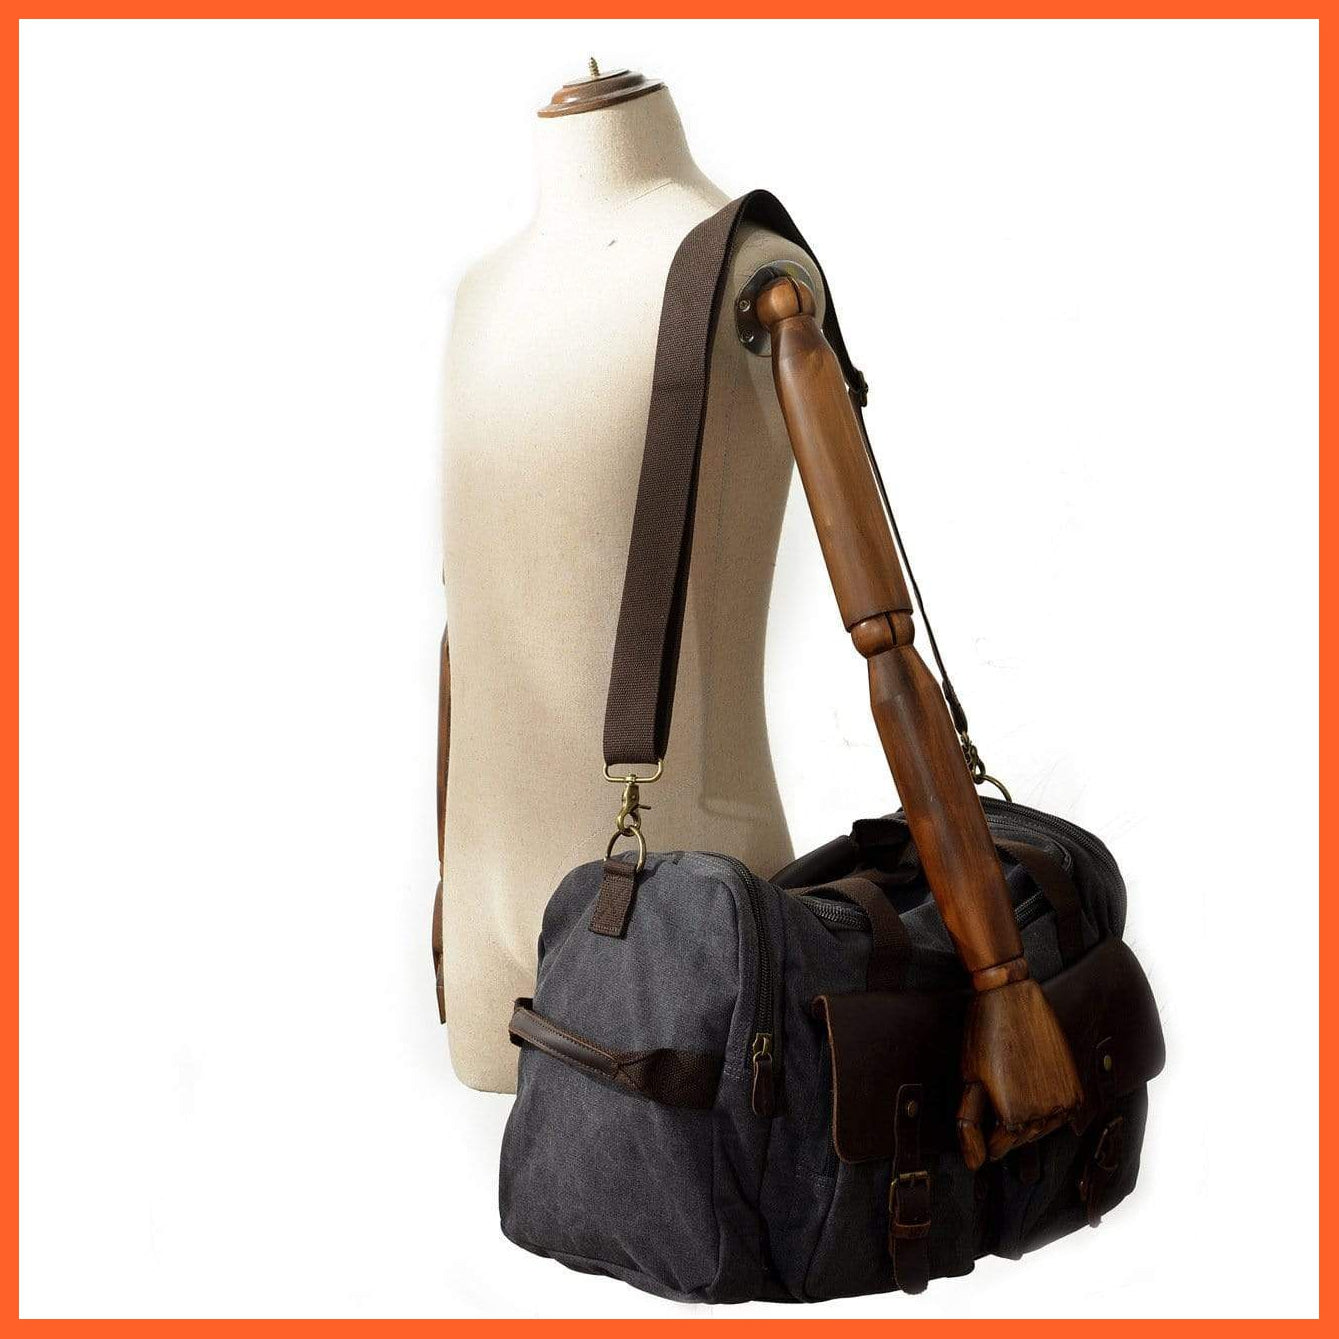 Large Gym Bag | Travel Bag | Storage Bag | Mens Bags | Sports Bag | whatagift.com.au.